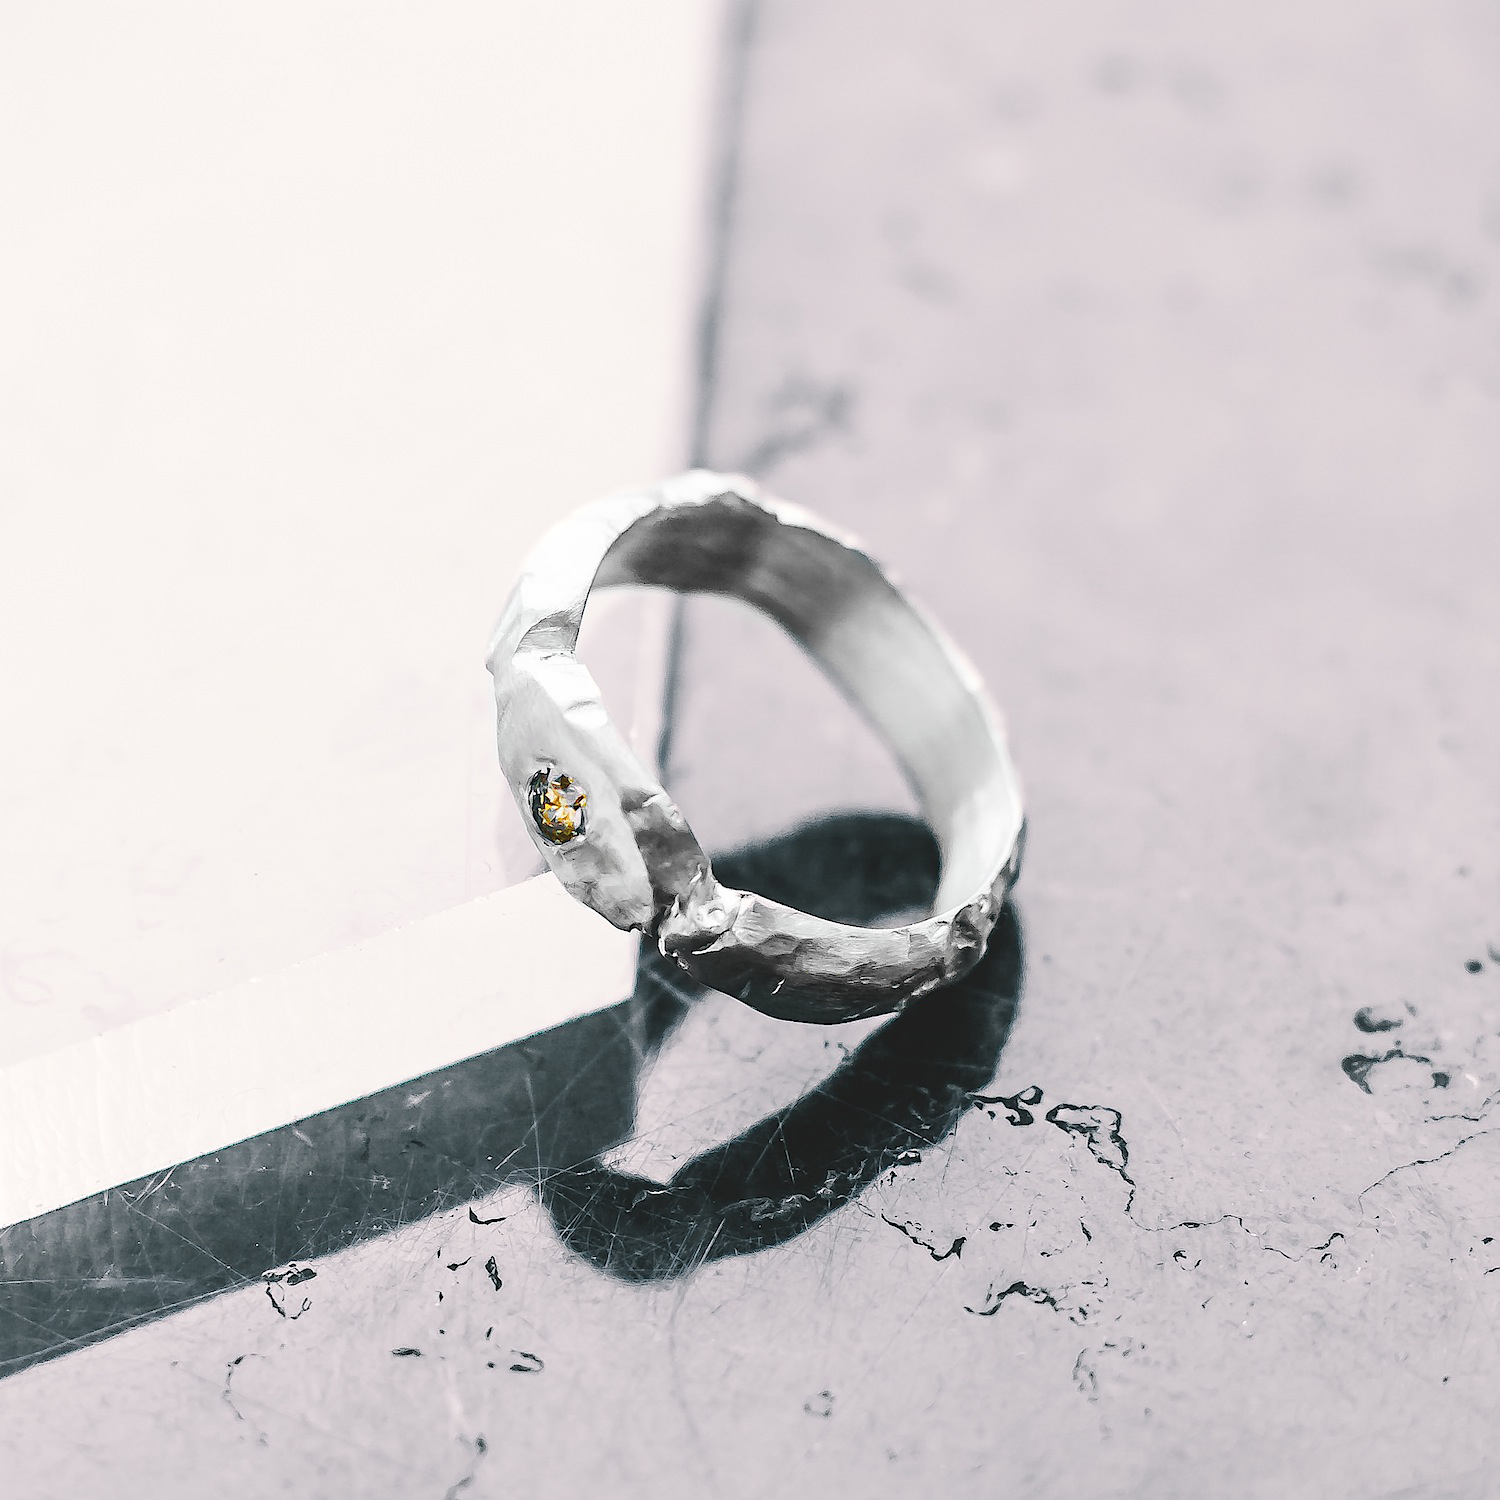 Textured Band Gemstone Ring